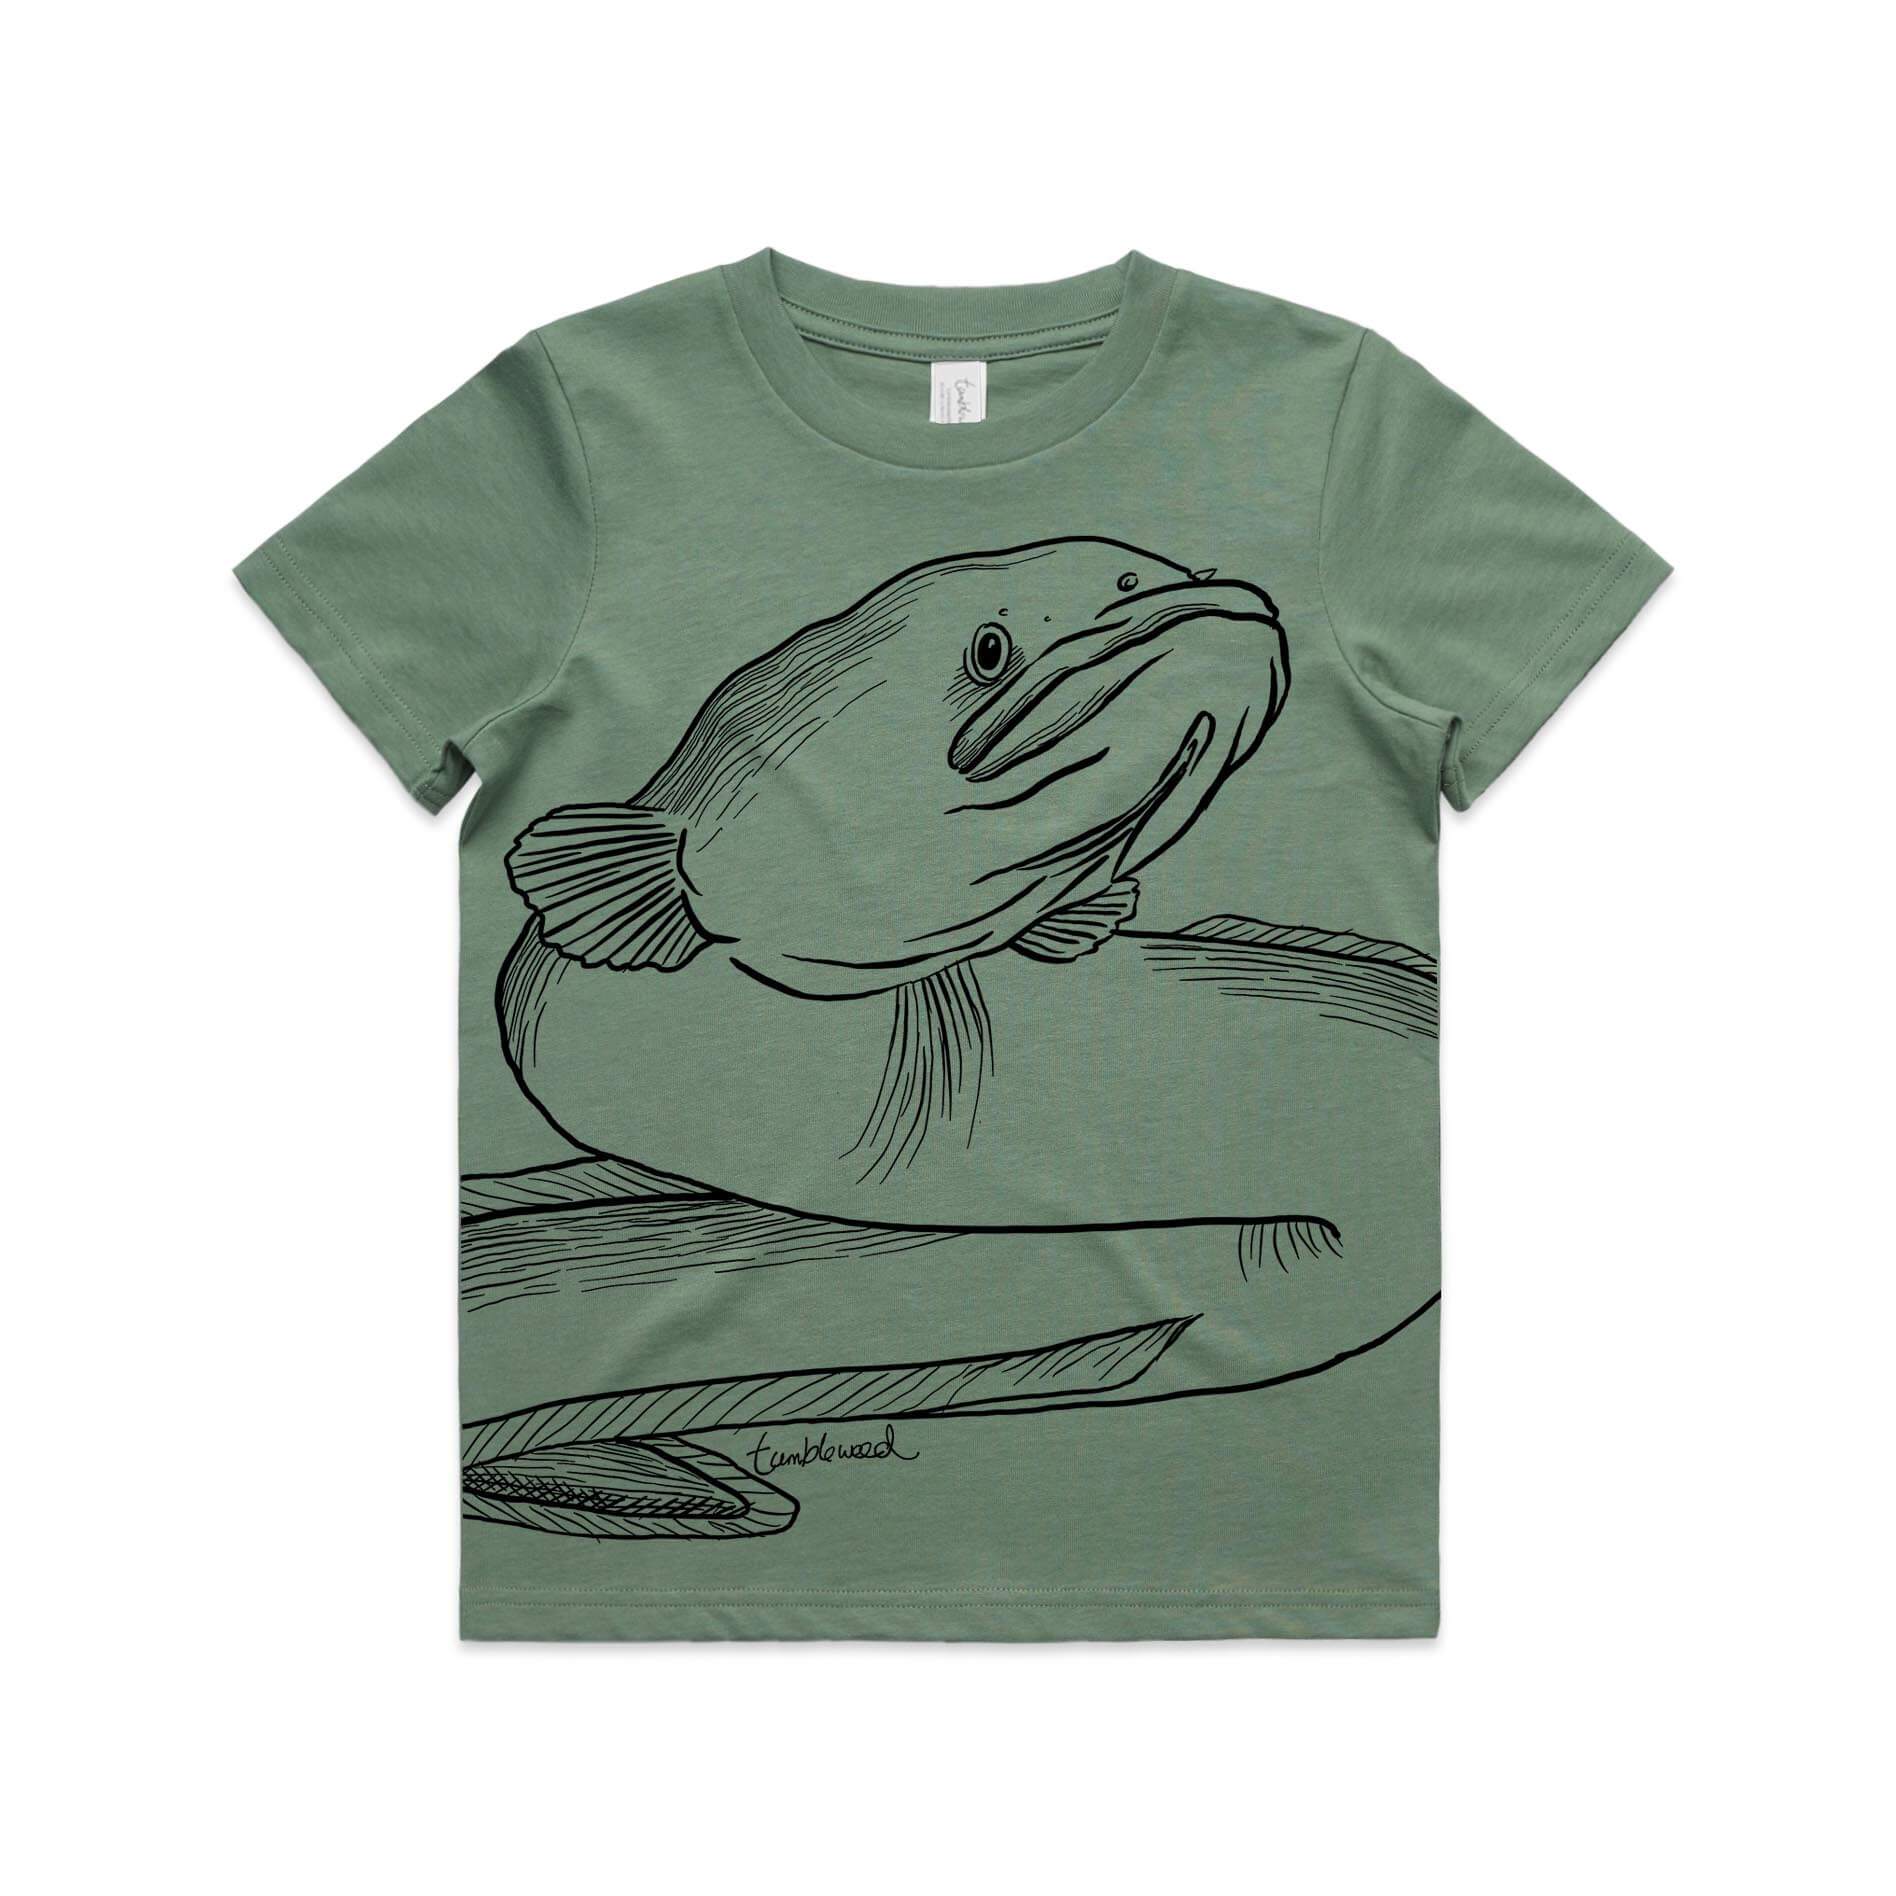 Sage, cotton kids' t-shirt with screen printed Long fin eel/tuna design.